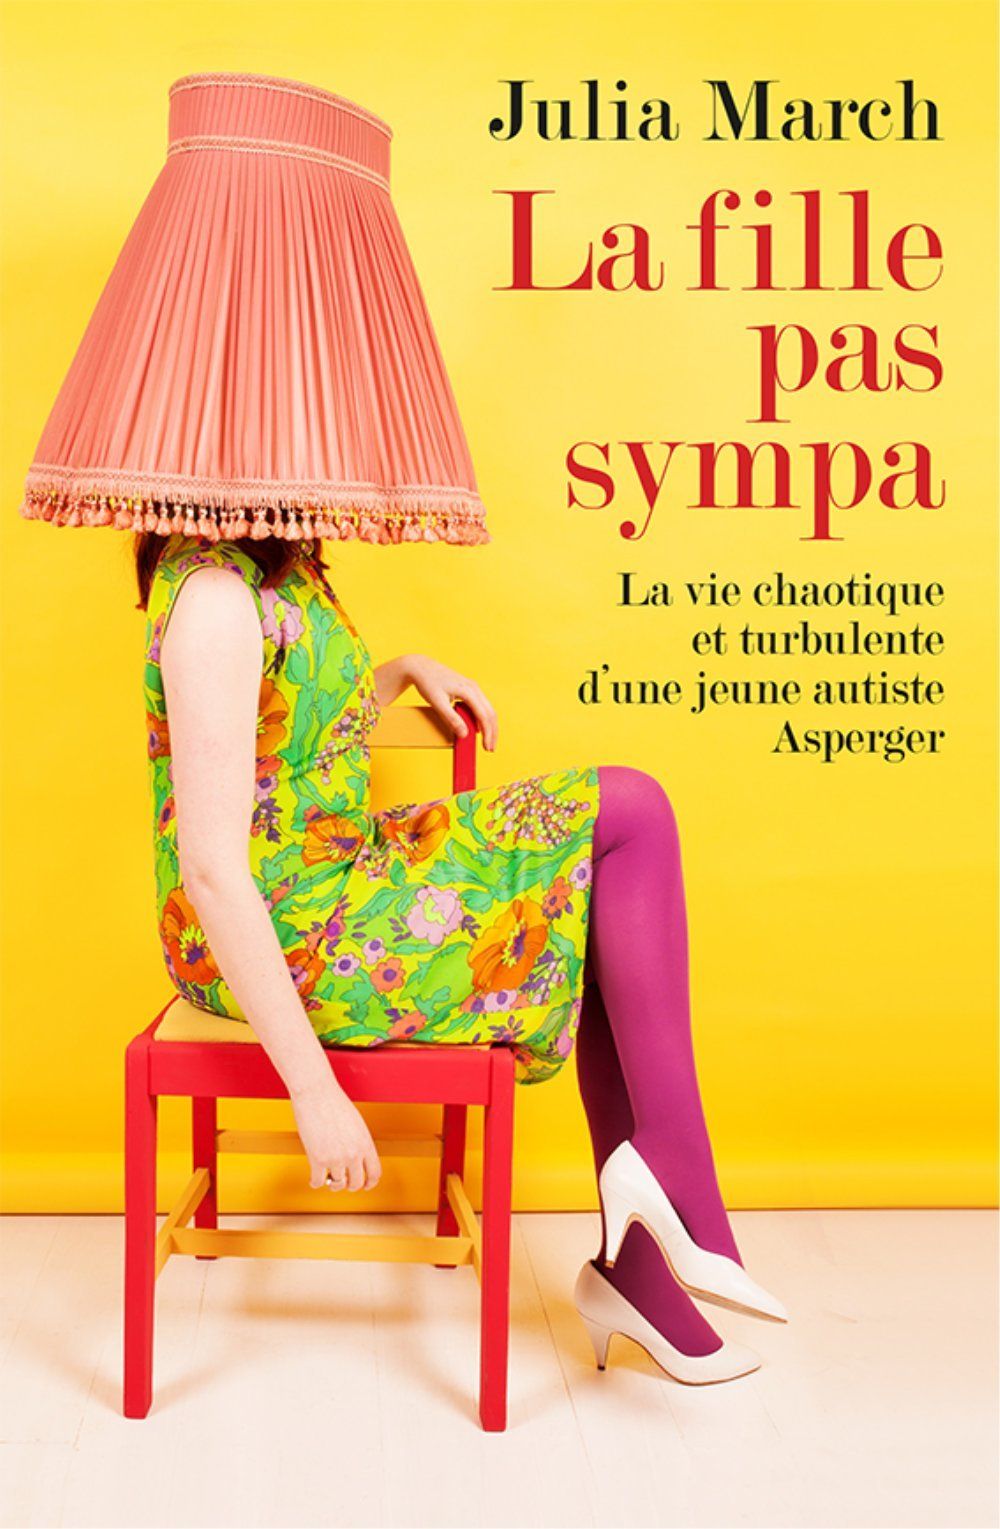 The cover of Julia March’s book “La fille pas sympa”.